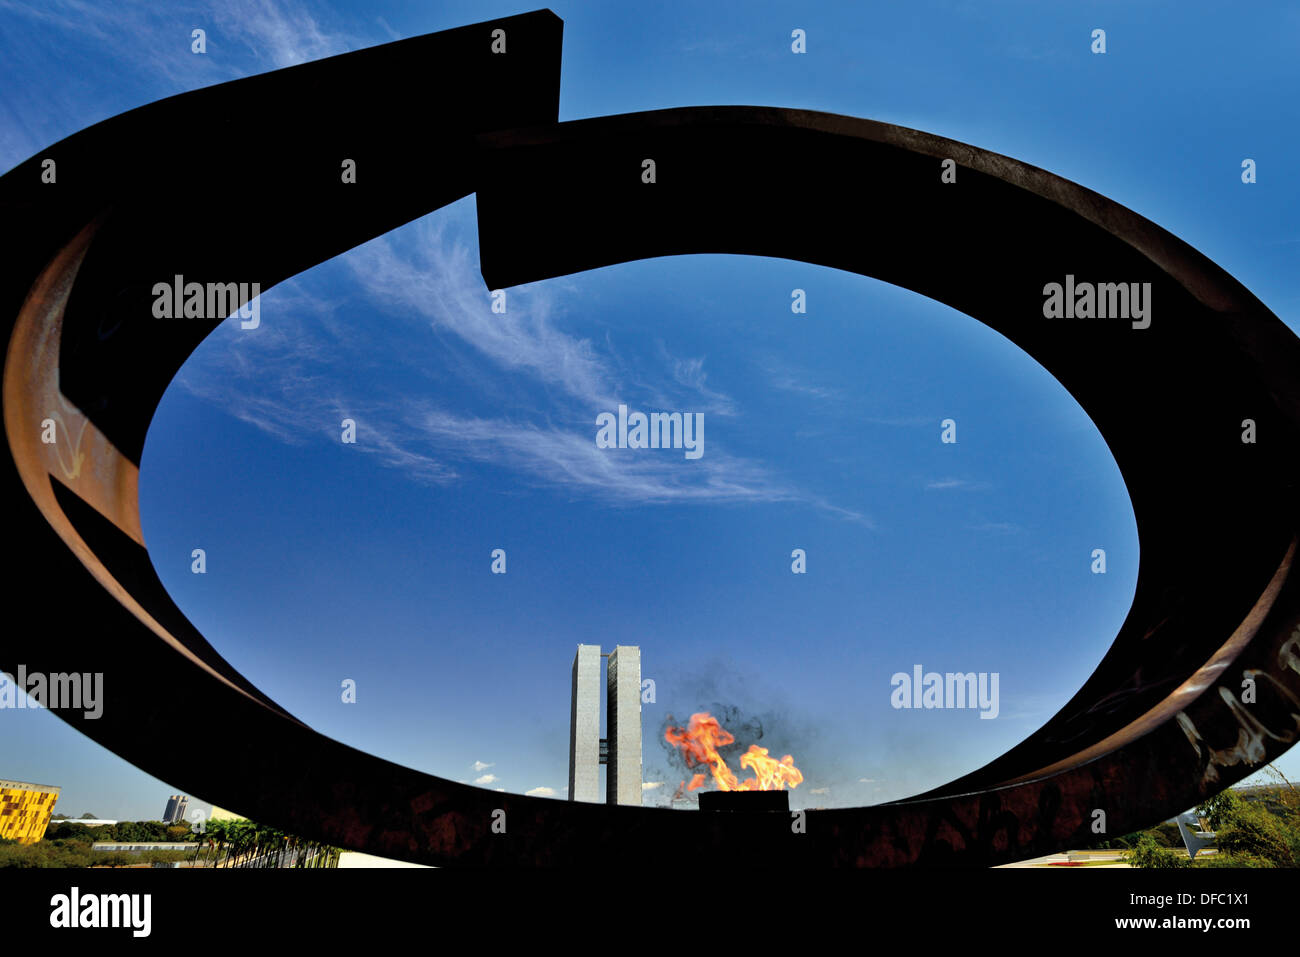 Brazil, Brasilia: Eternal flame of the National Pantheon of Liberty Tancredo Neves by Oscar Niemeyer Stock Photo